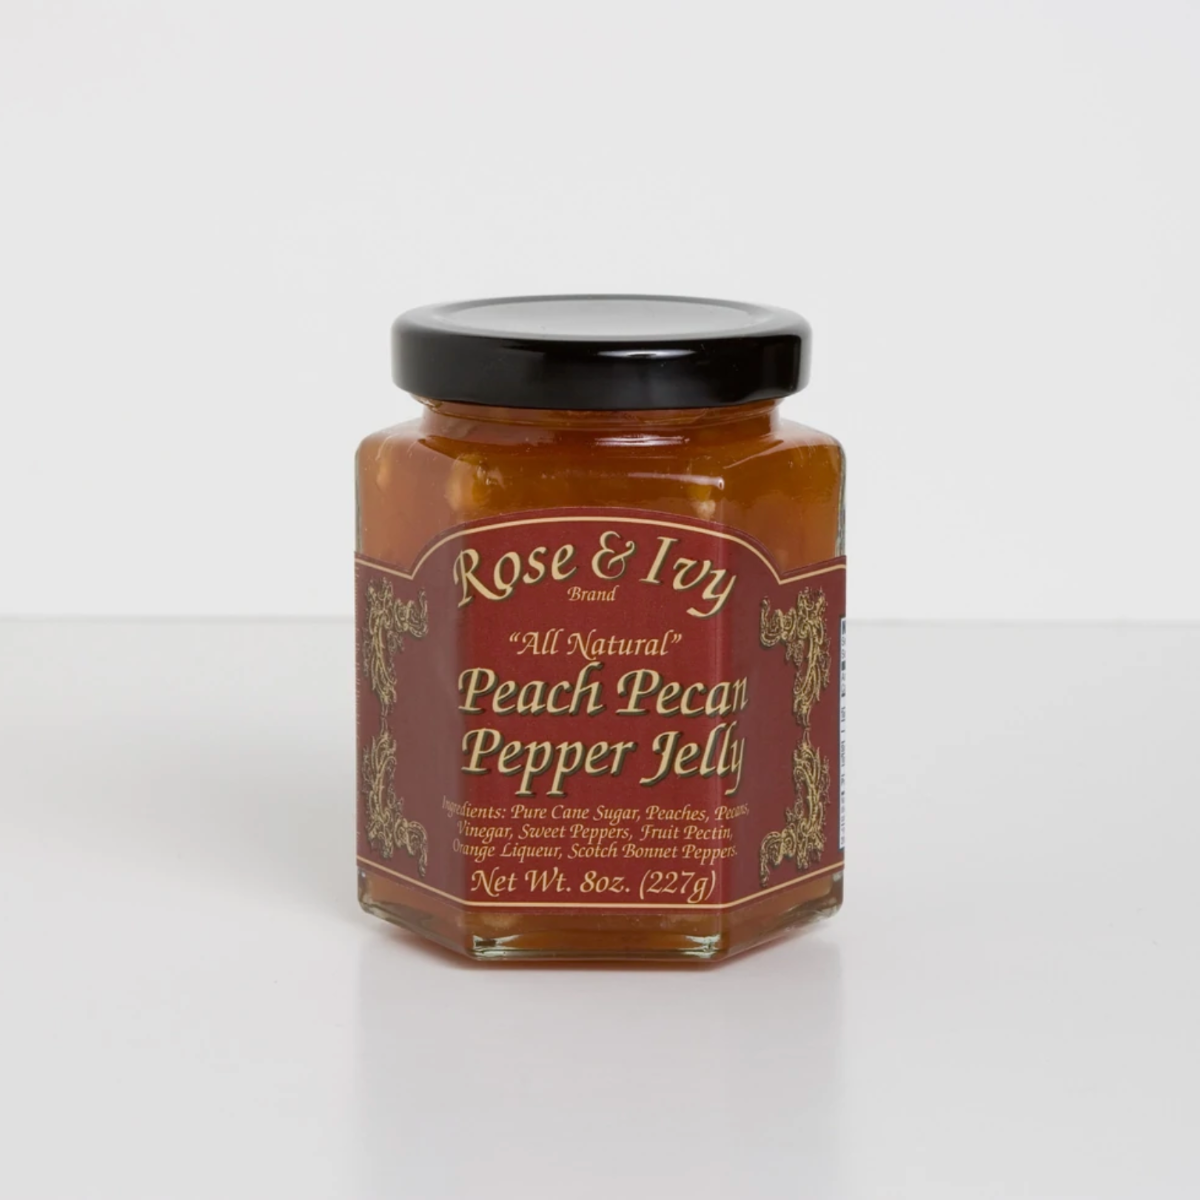 Rose & Ivy Peach Pecan Pepper Jelly